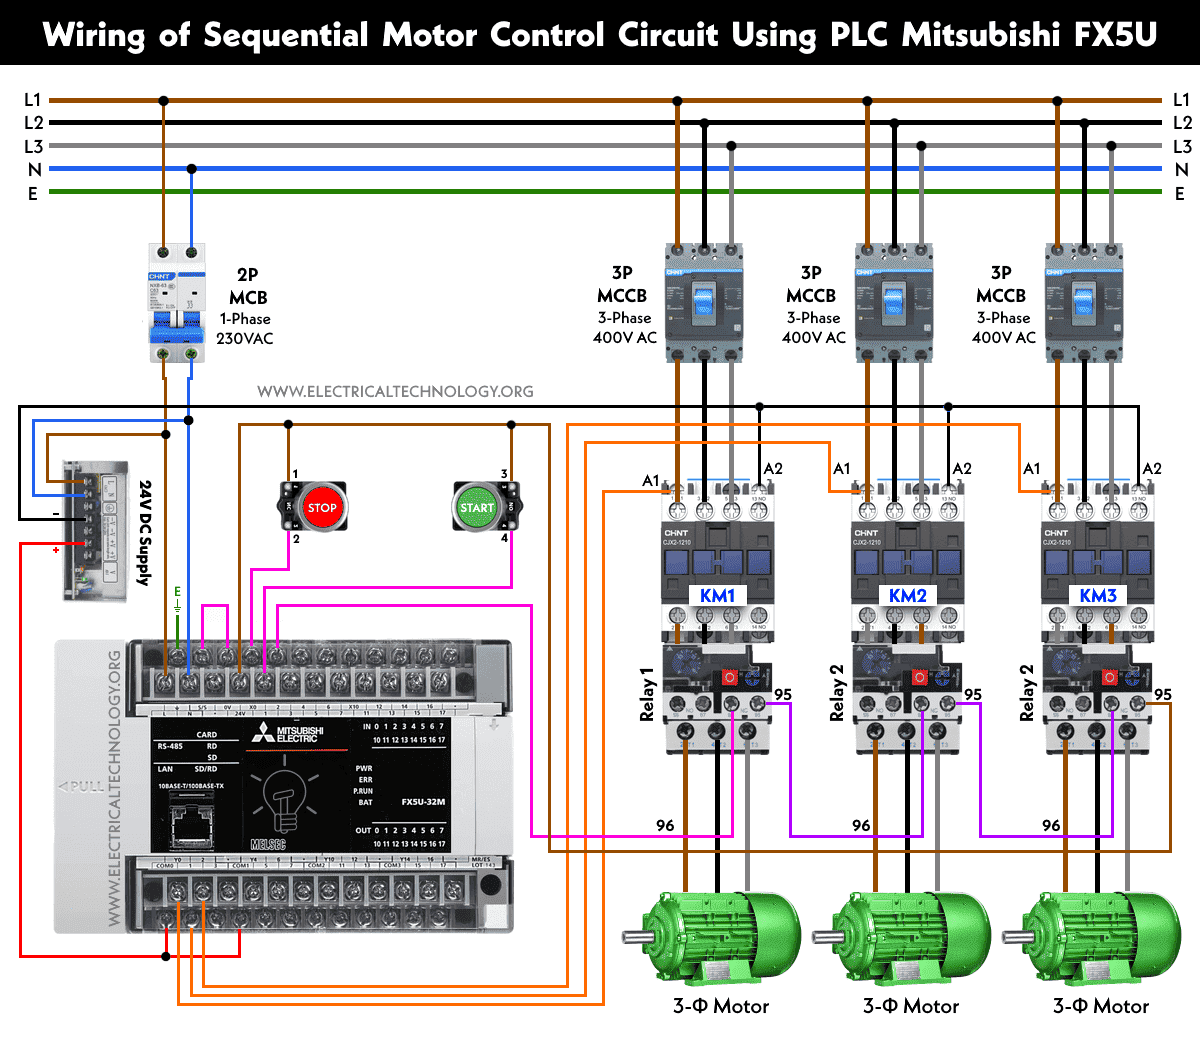 Wiring of Sequential Motor Control Circuit Using PLC Mitsubishi FX5U